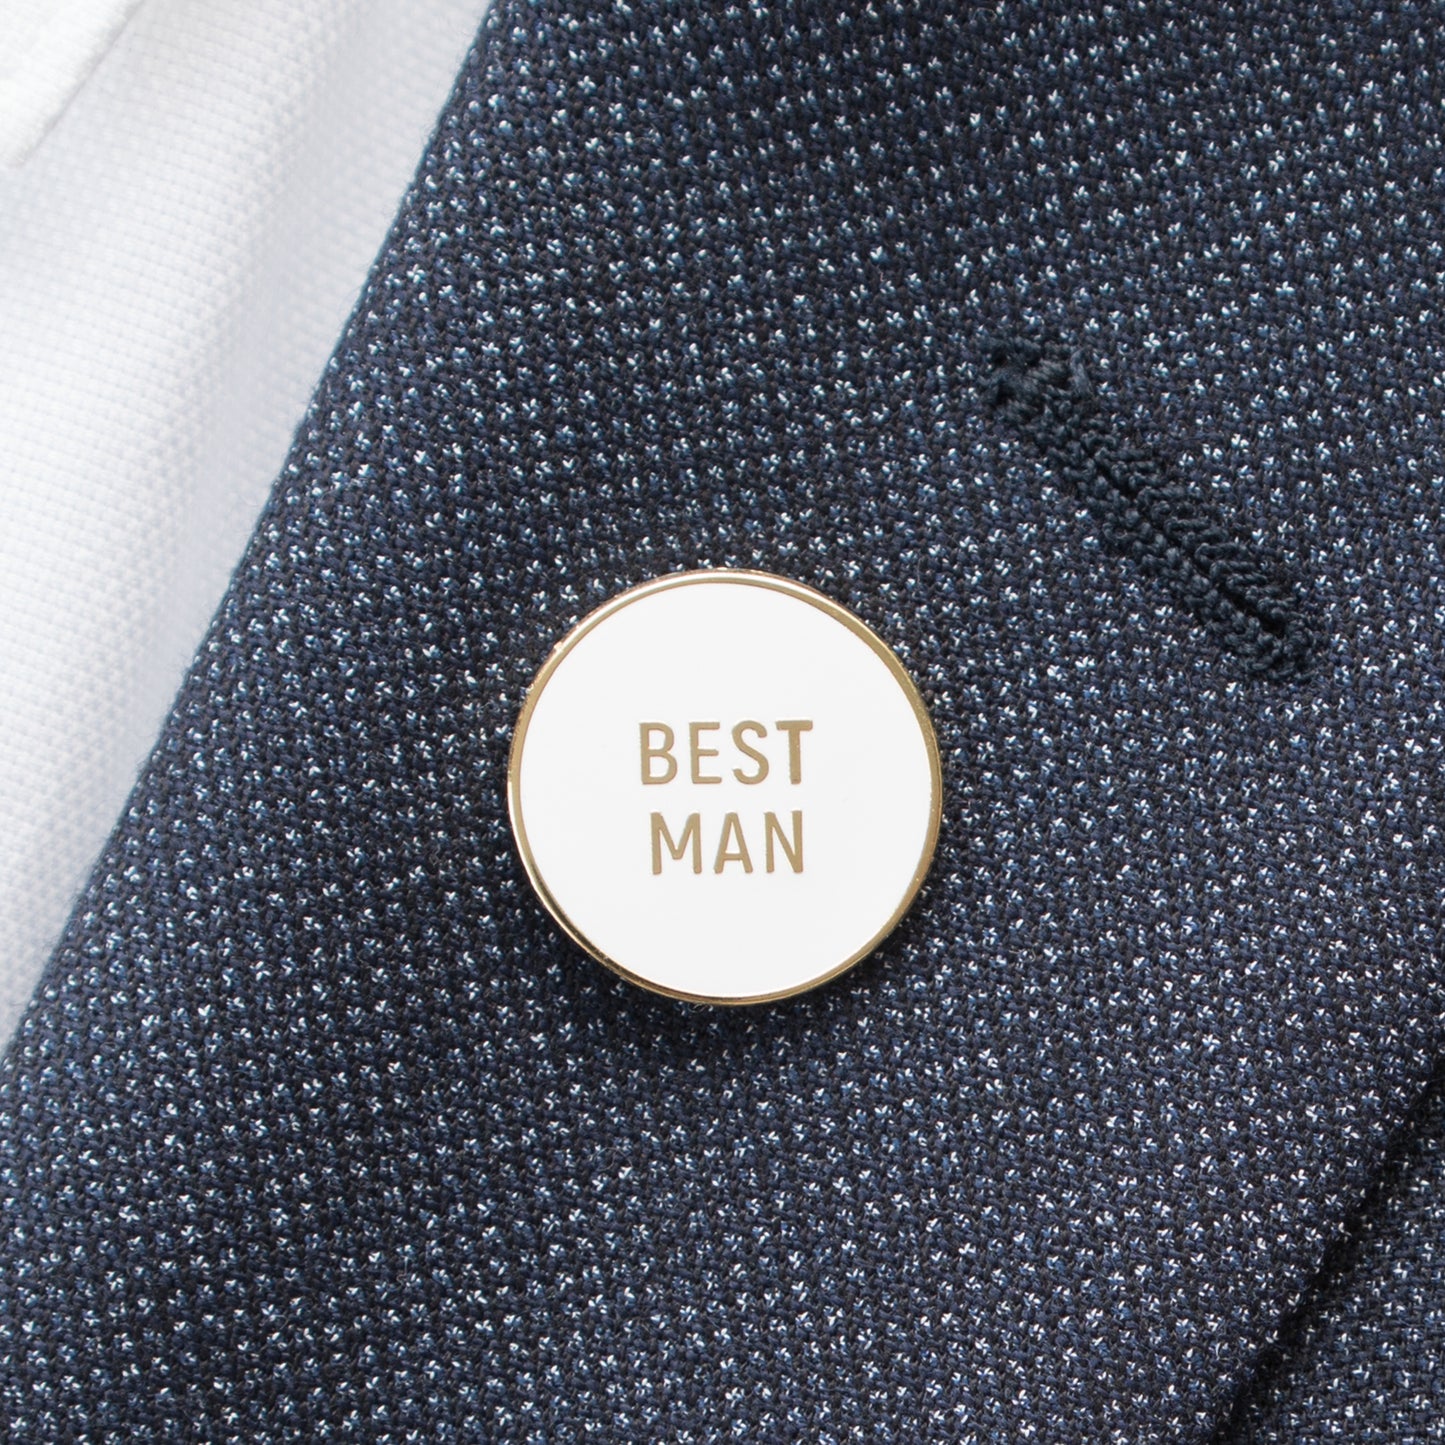 Best Man Pin